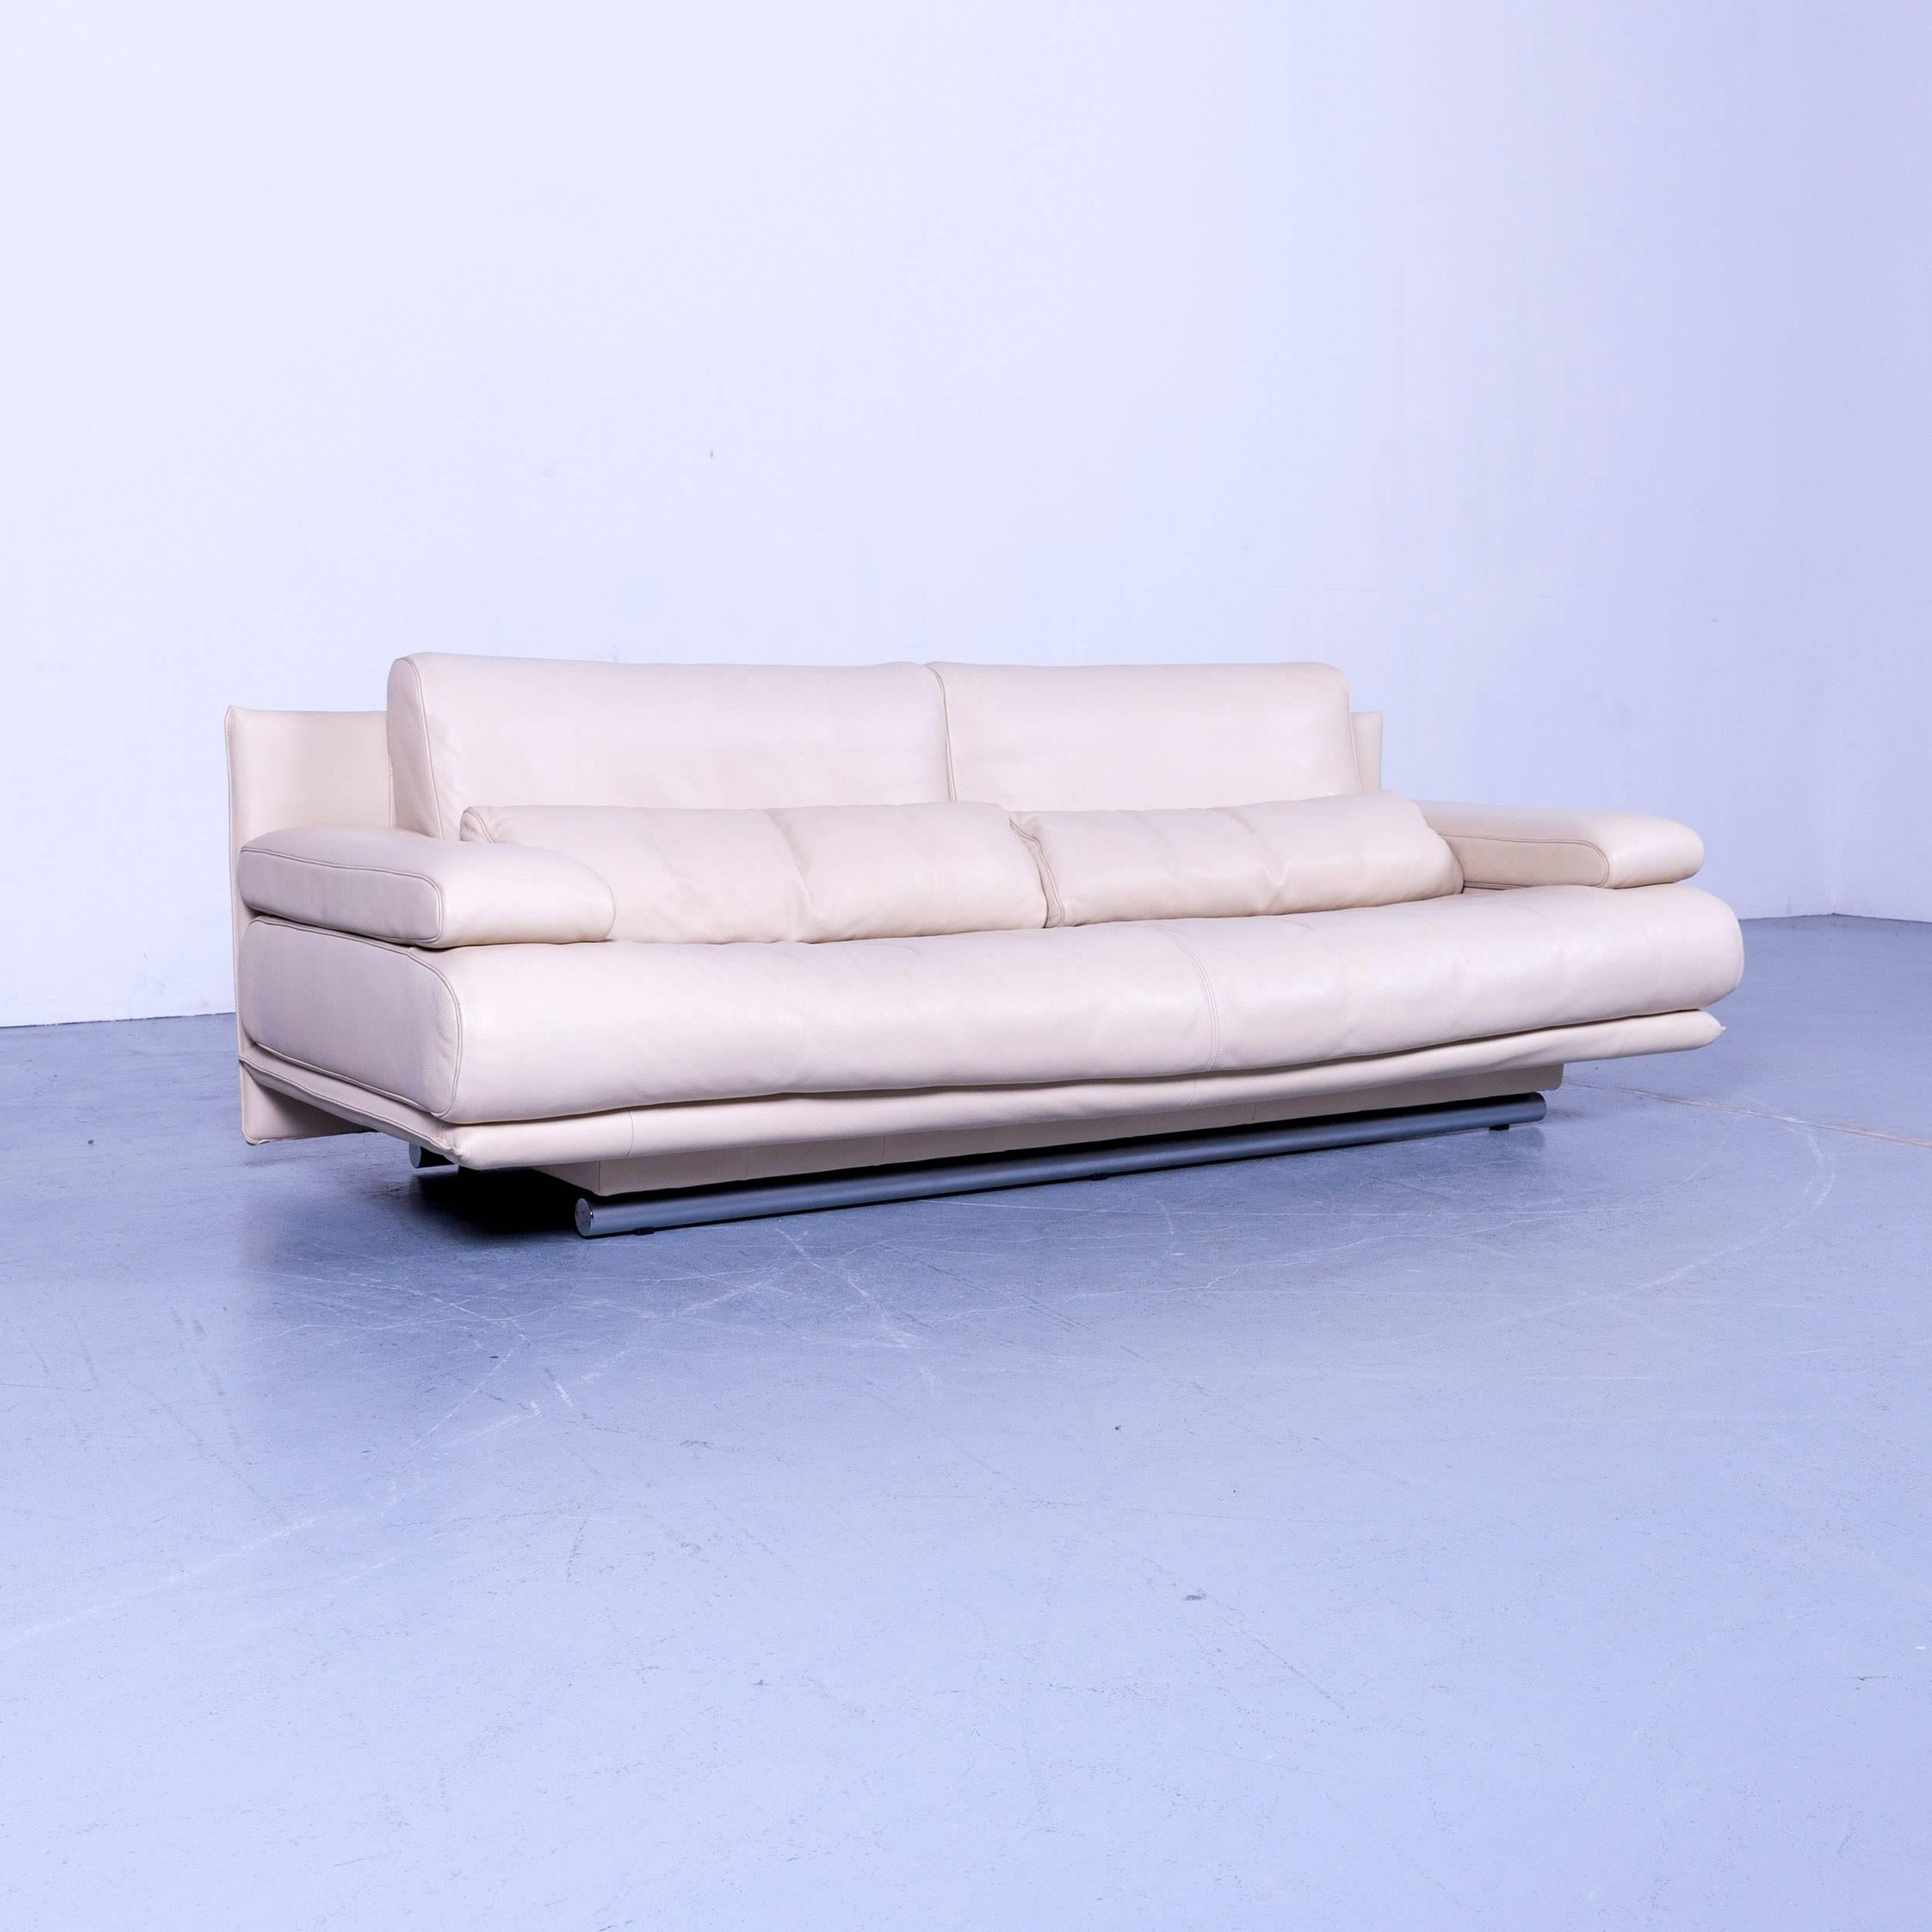 An Rolf Benz 6500 designer sofa off-white three-seater leather modern.


















 